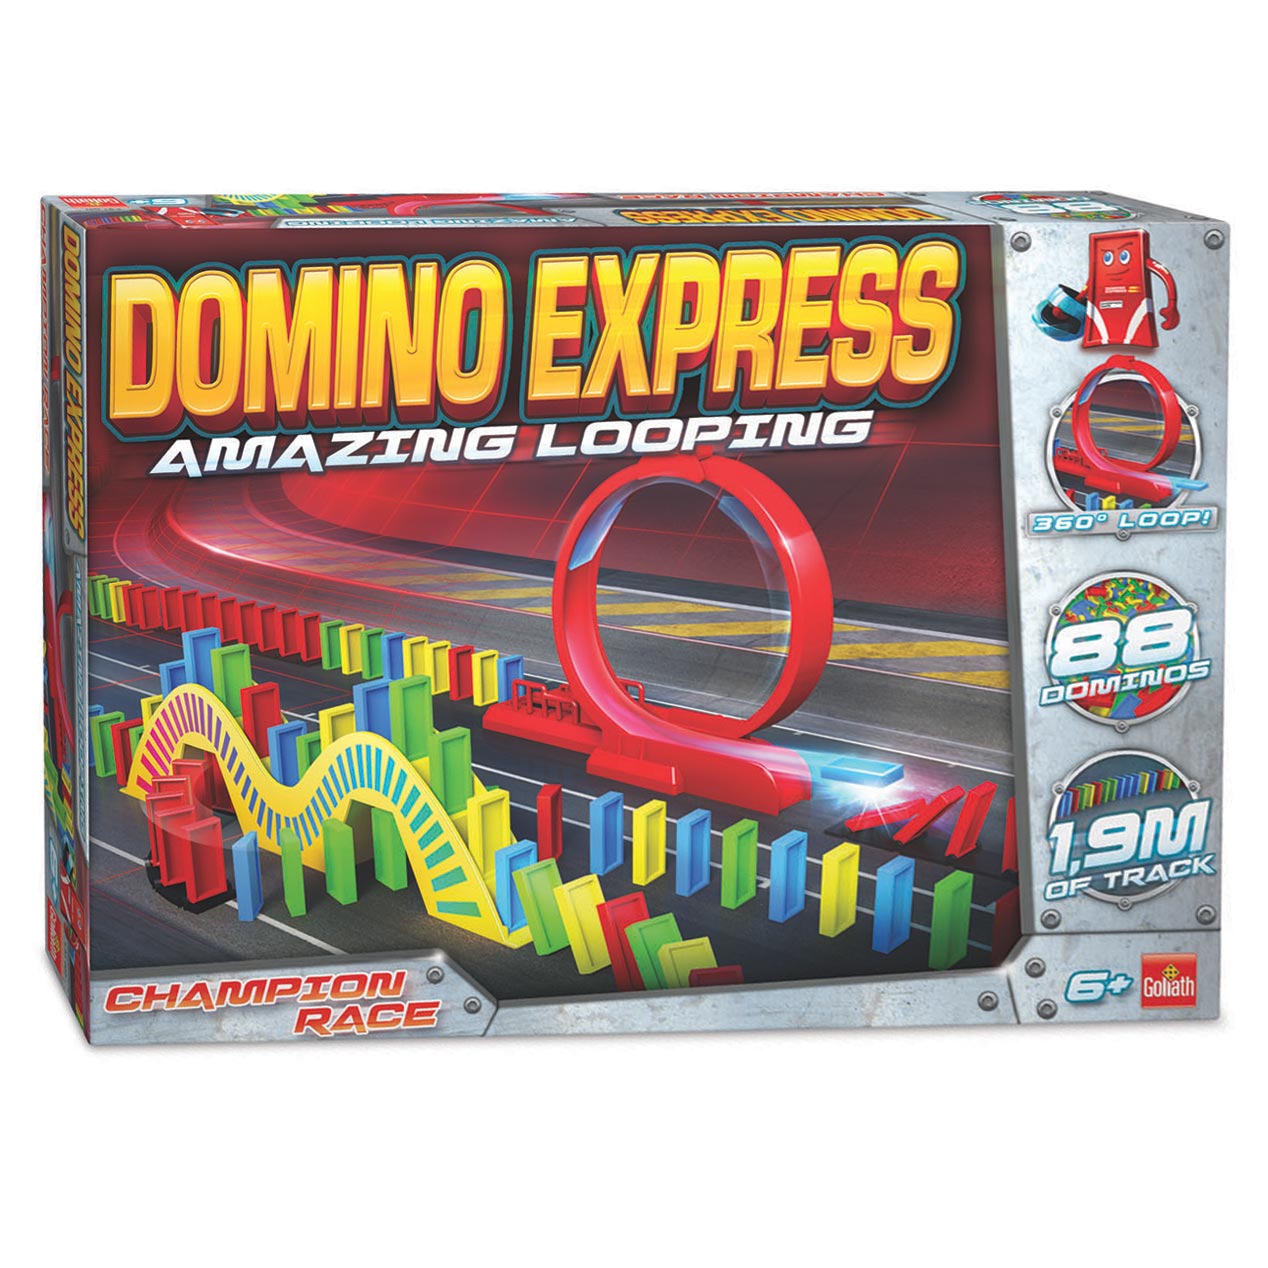 Domino Express Express Express Amazing Looping